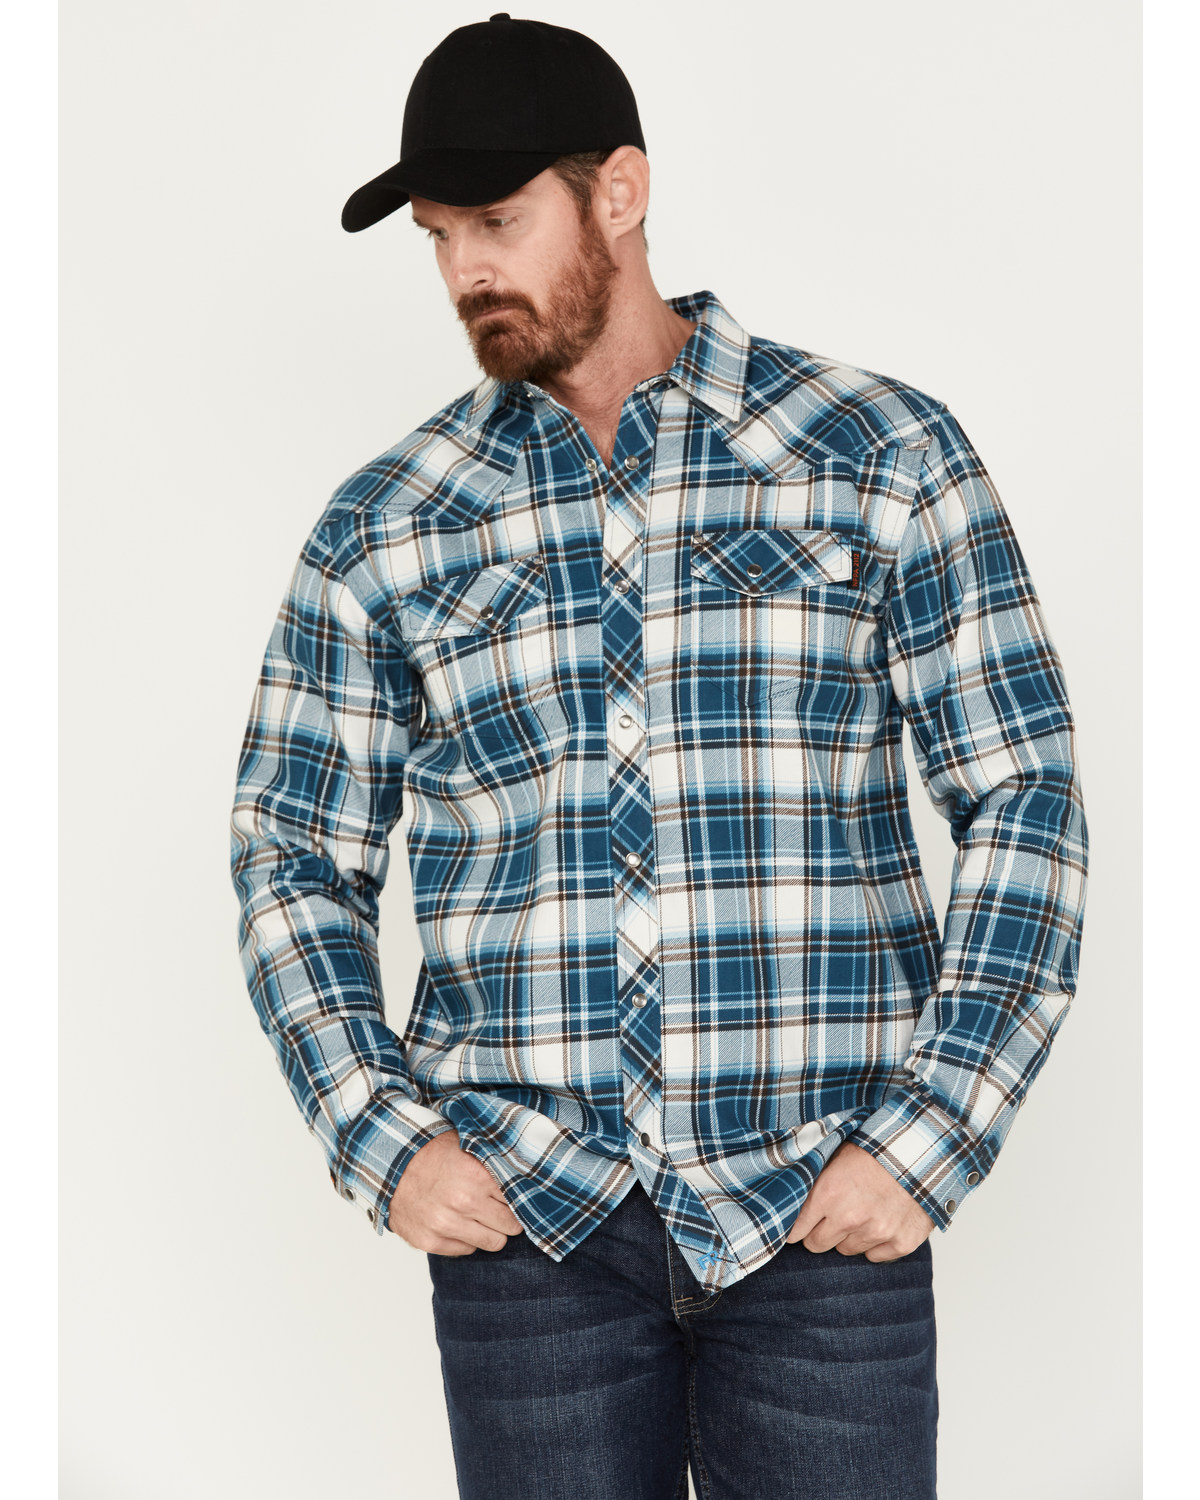 Cody James Men's FR Check Plaid Print Long Sleeve Pearl Snap Work Shirt - Big & Tall